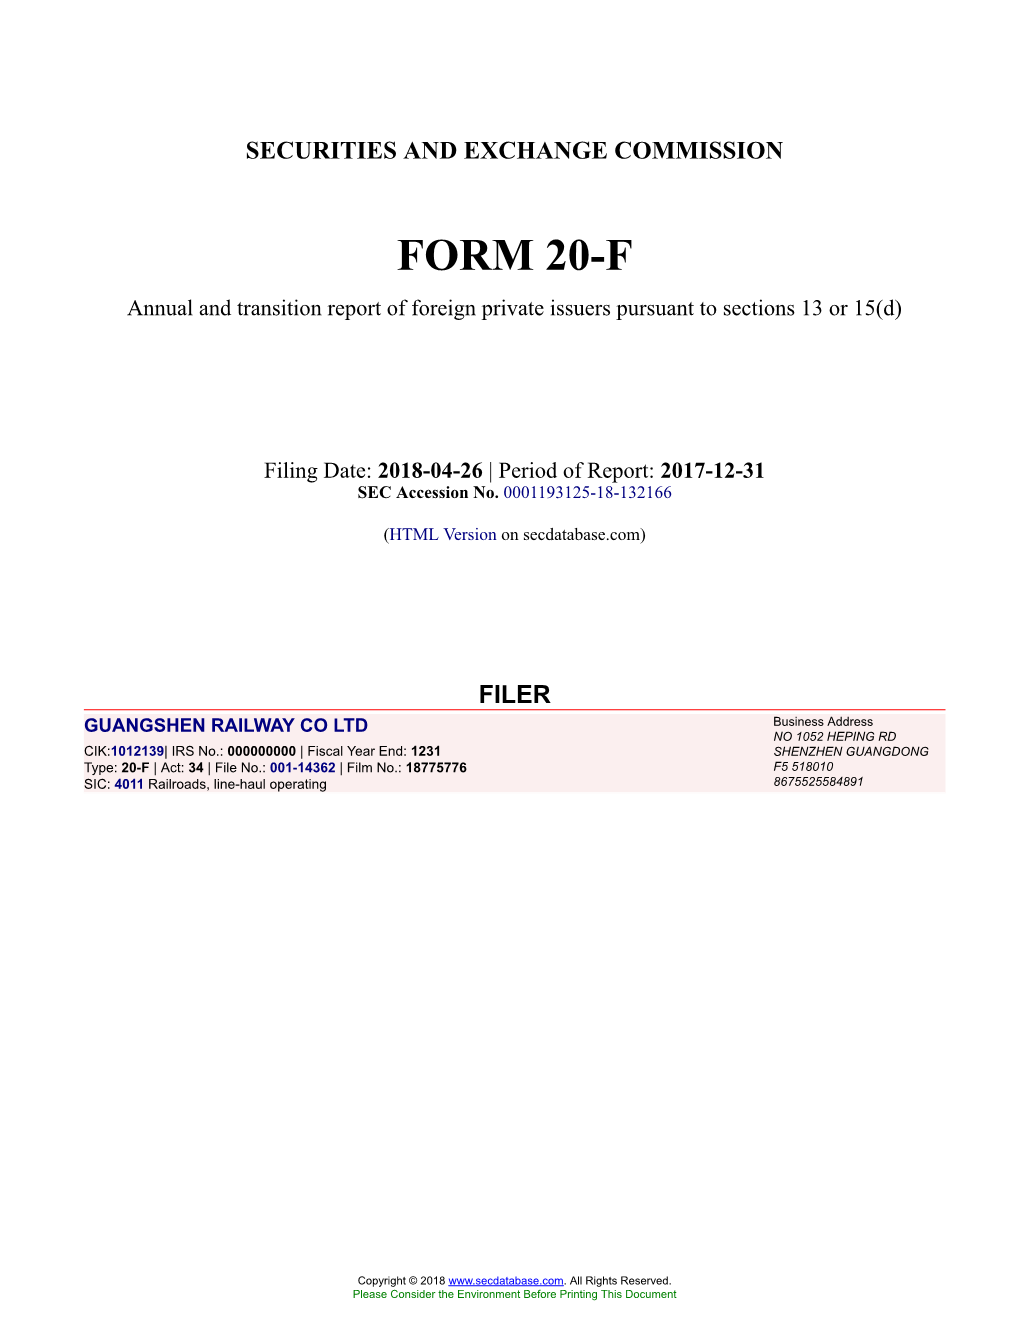 GUANGSHEN RAILWAY CO LTD Form 20-F Filed 2018-04-26